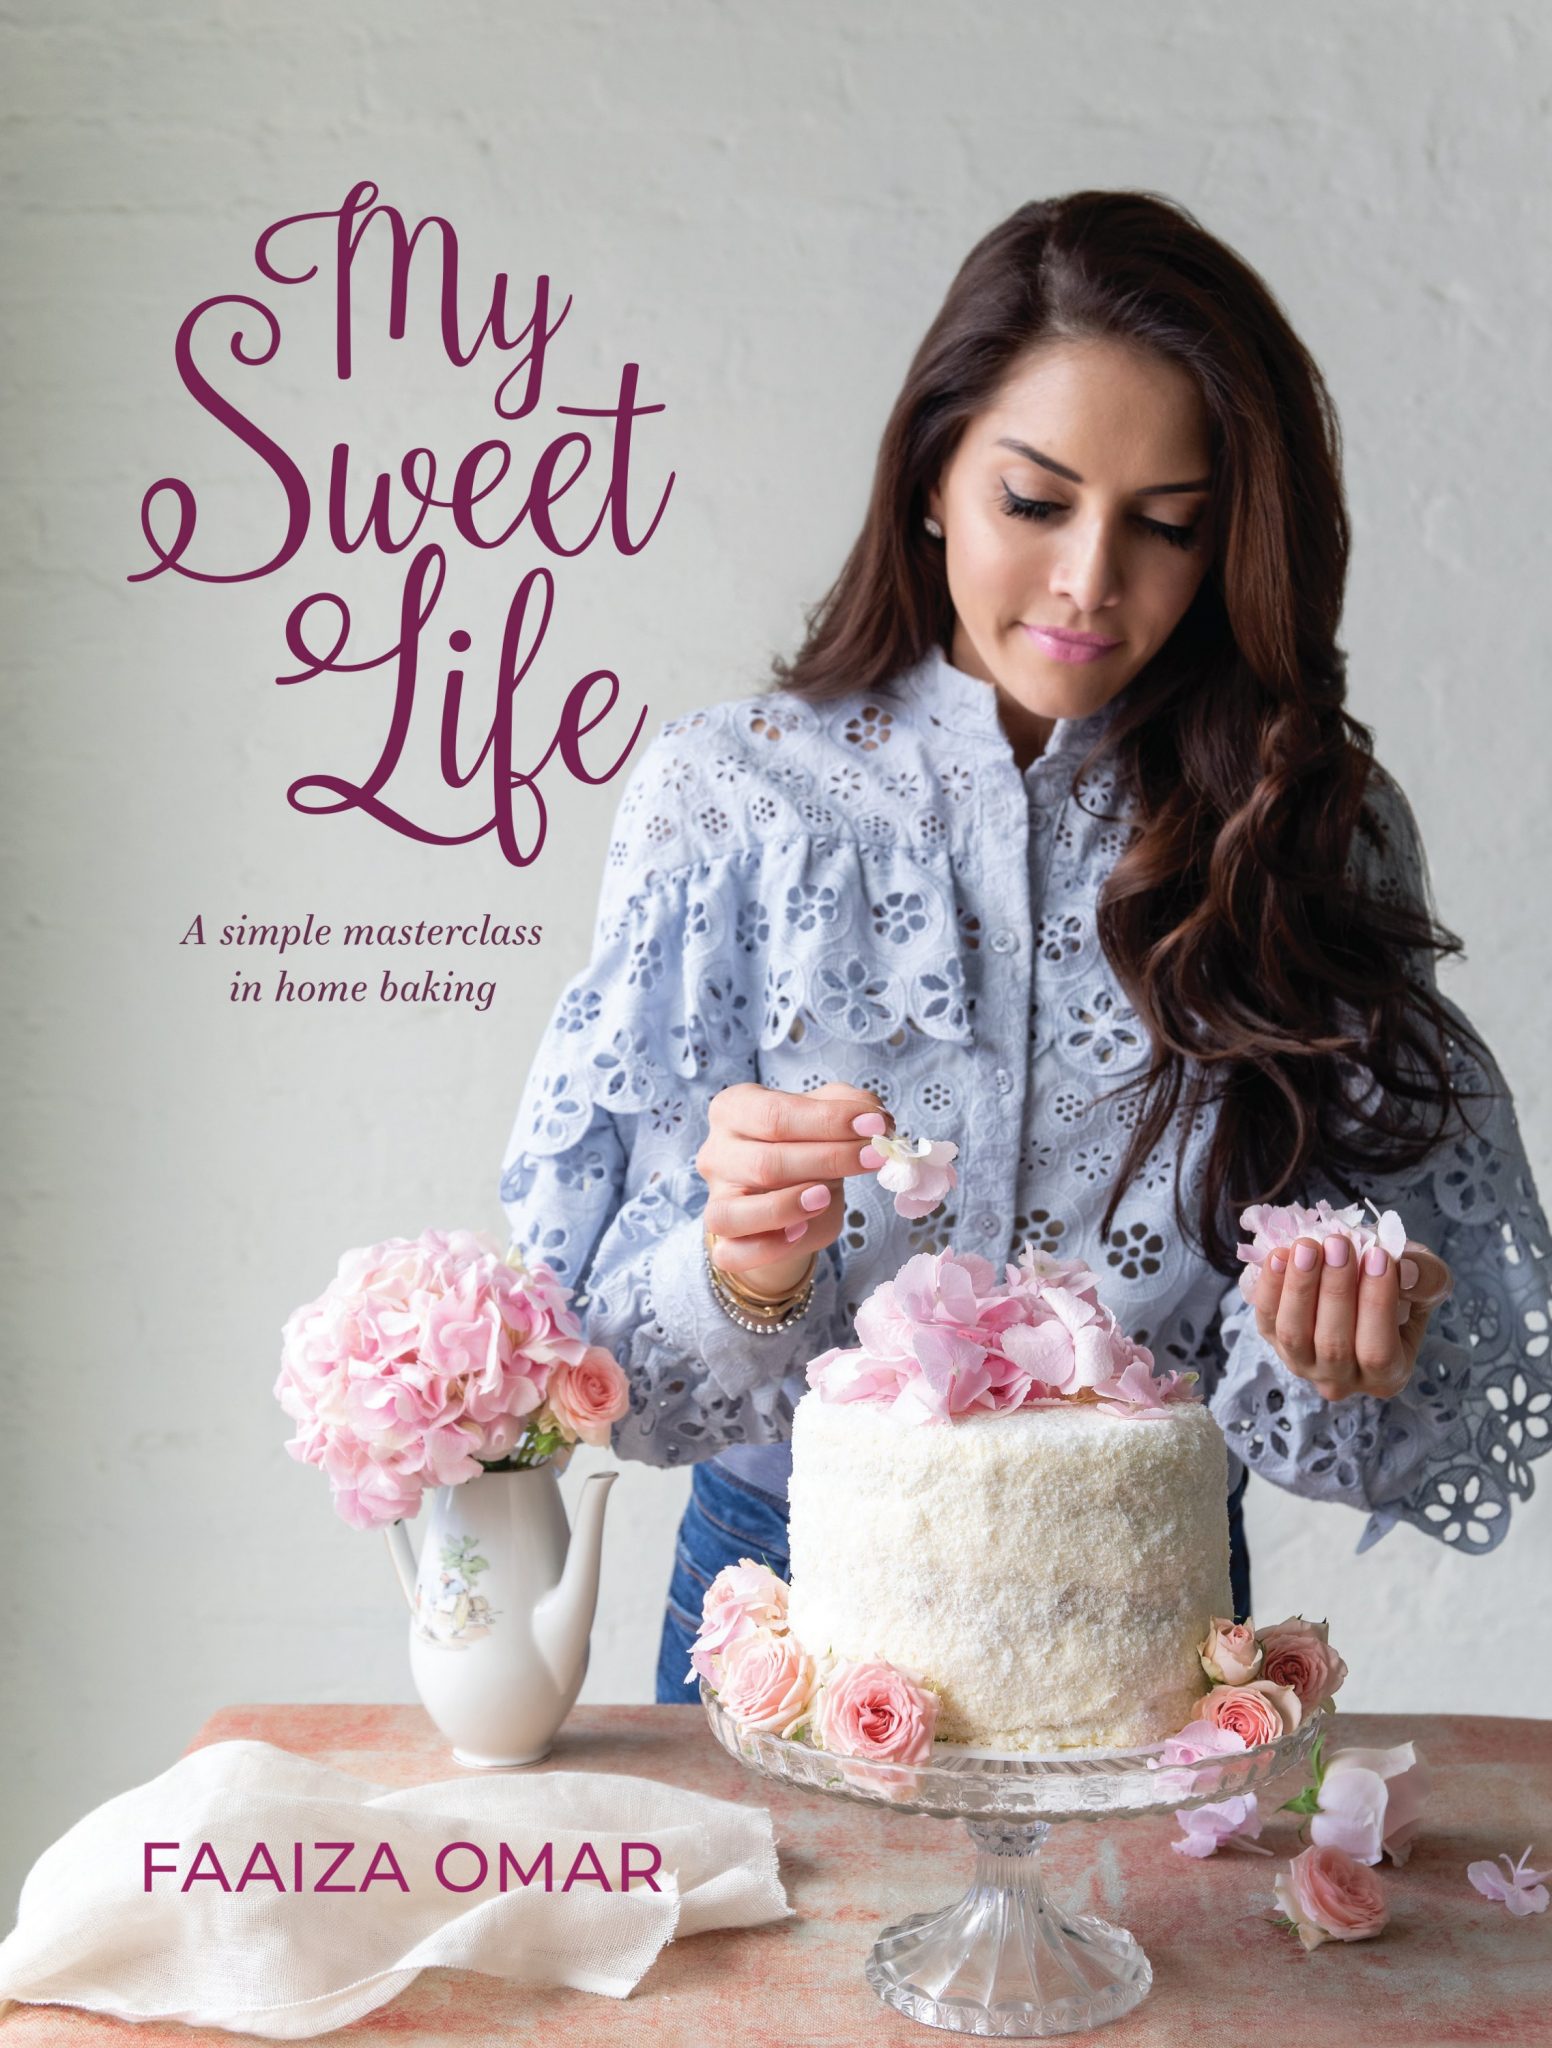 Faaiza Omar's Chocolate Honey Cake new cookbook My Sweet Life Sonia Cabano blog eatdrinkcapetown 